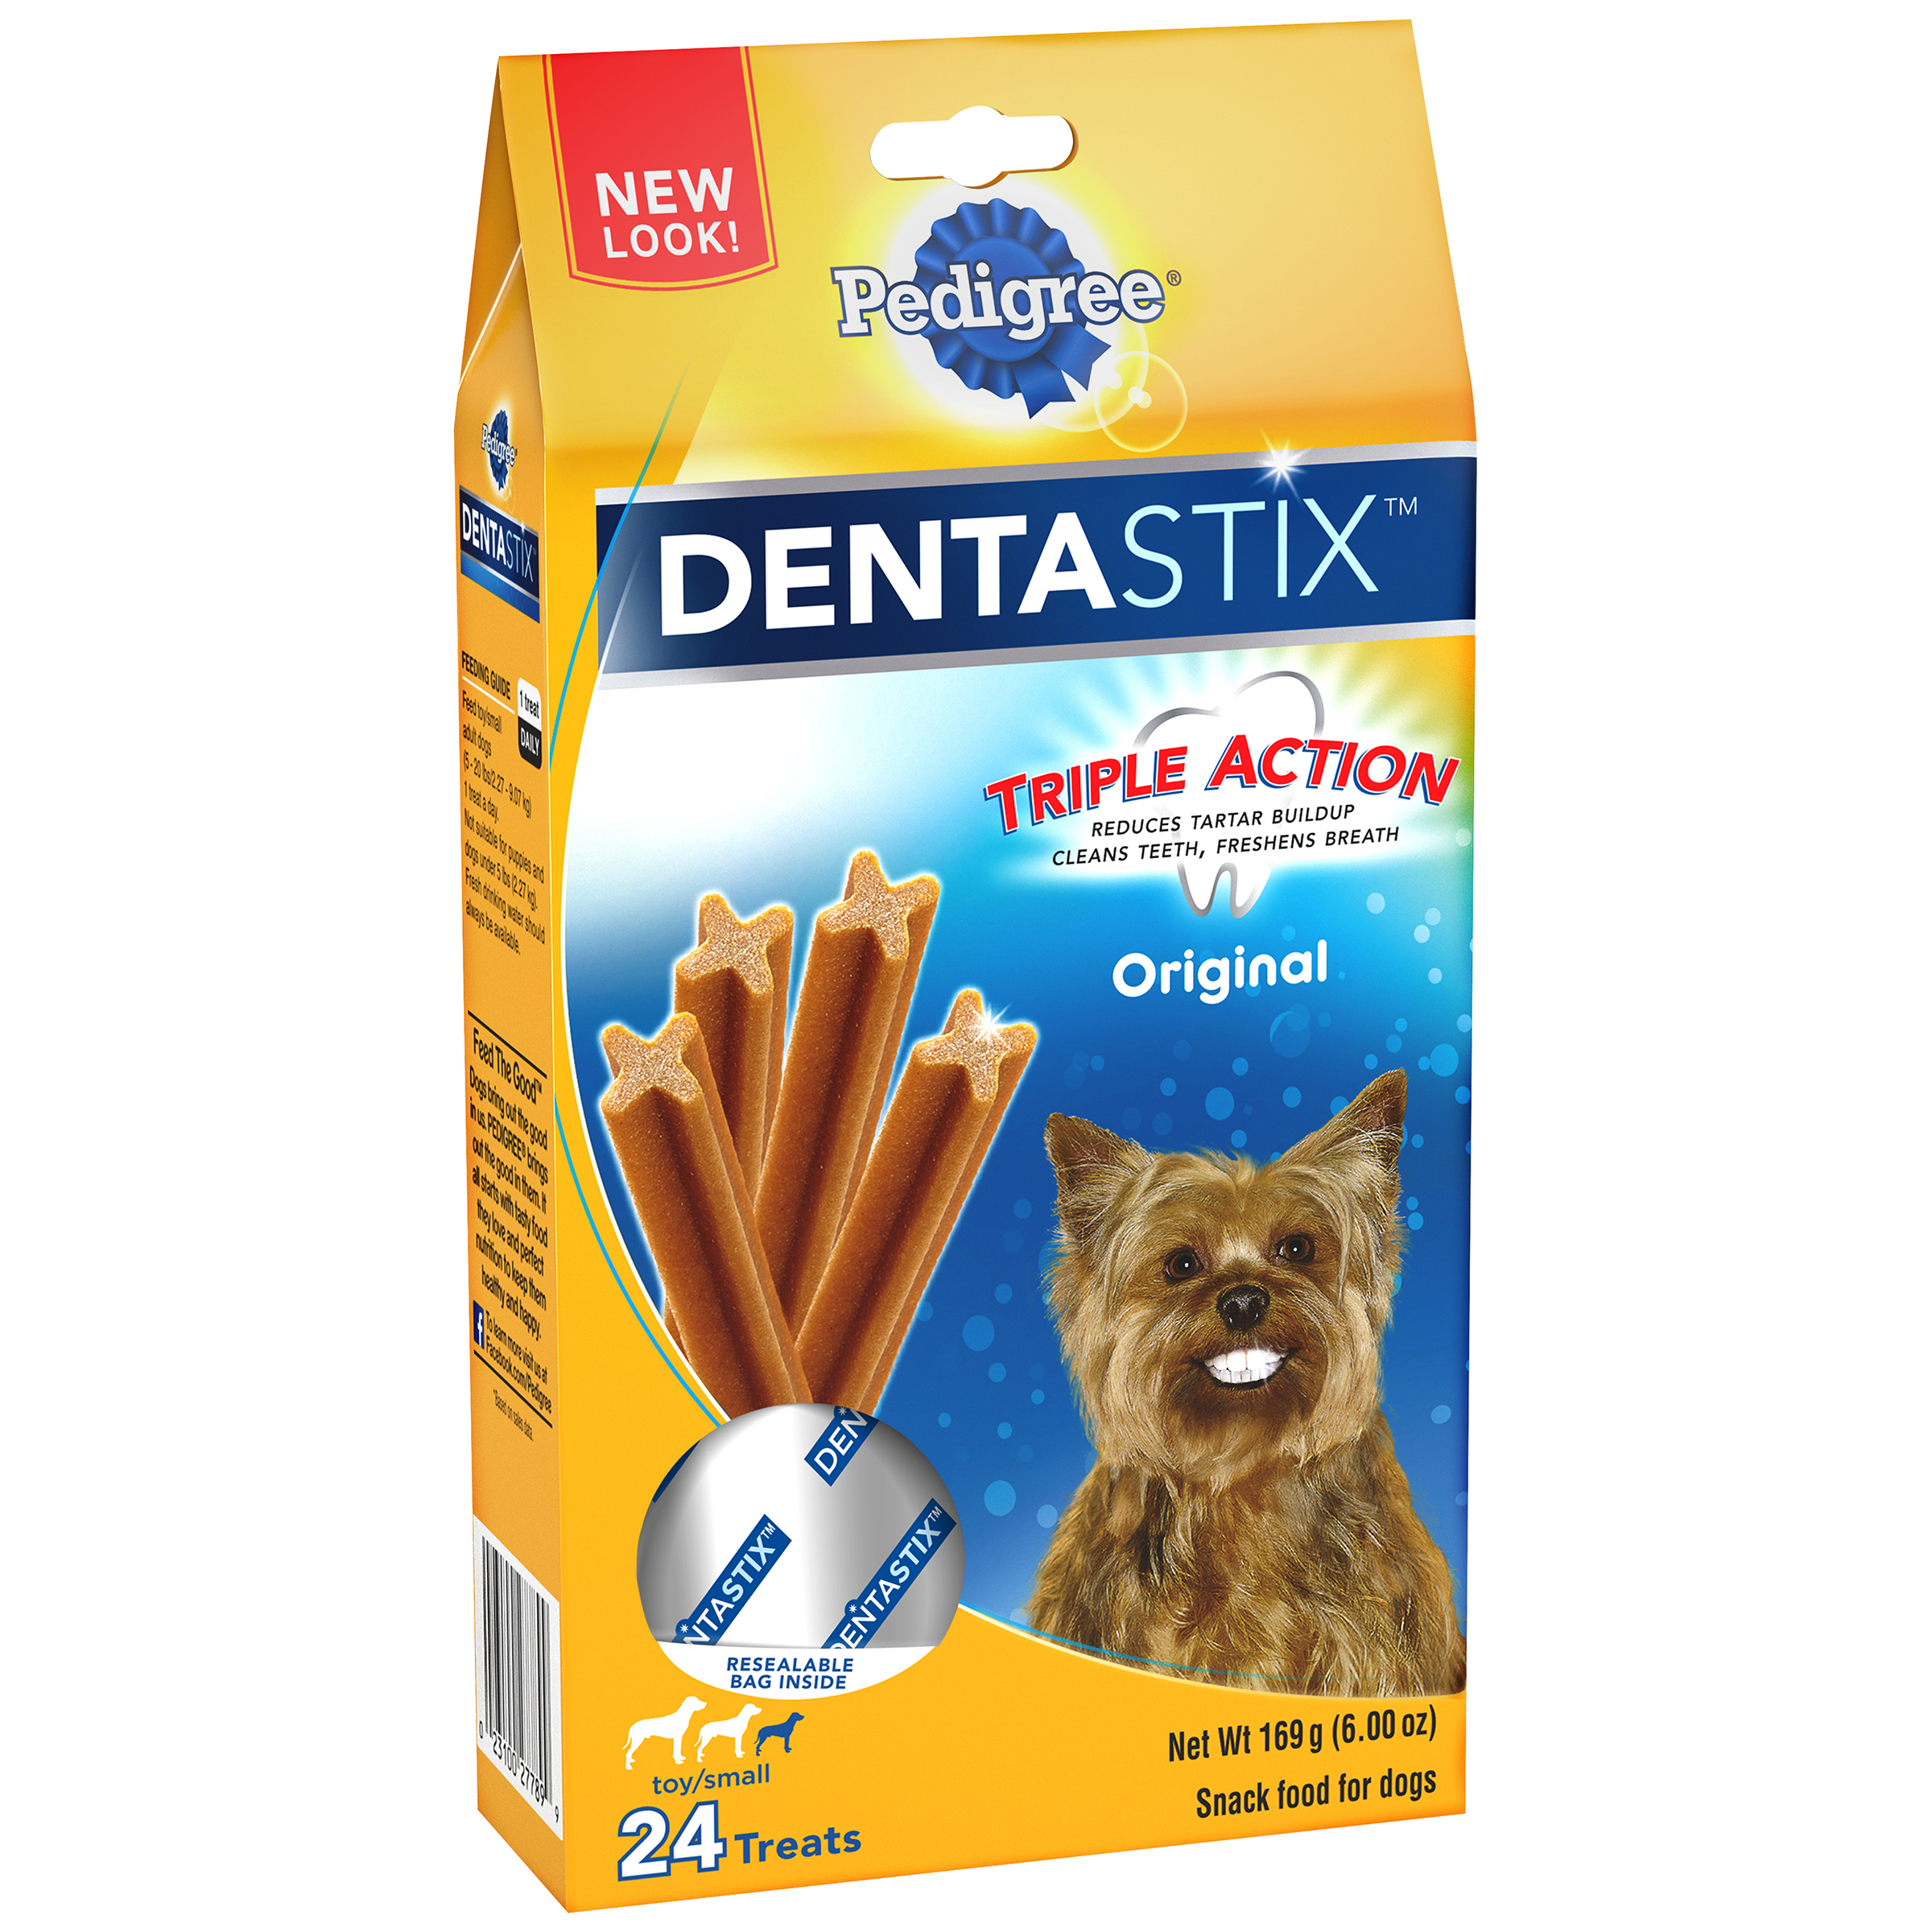 Pedigree DentaStix Snack Food for Dogs, Mini, Toy/Small, 24 treats [169 g (6.0 oz)]